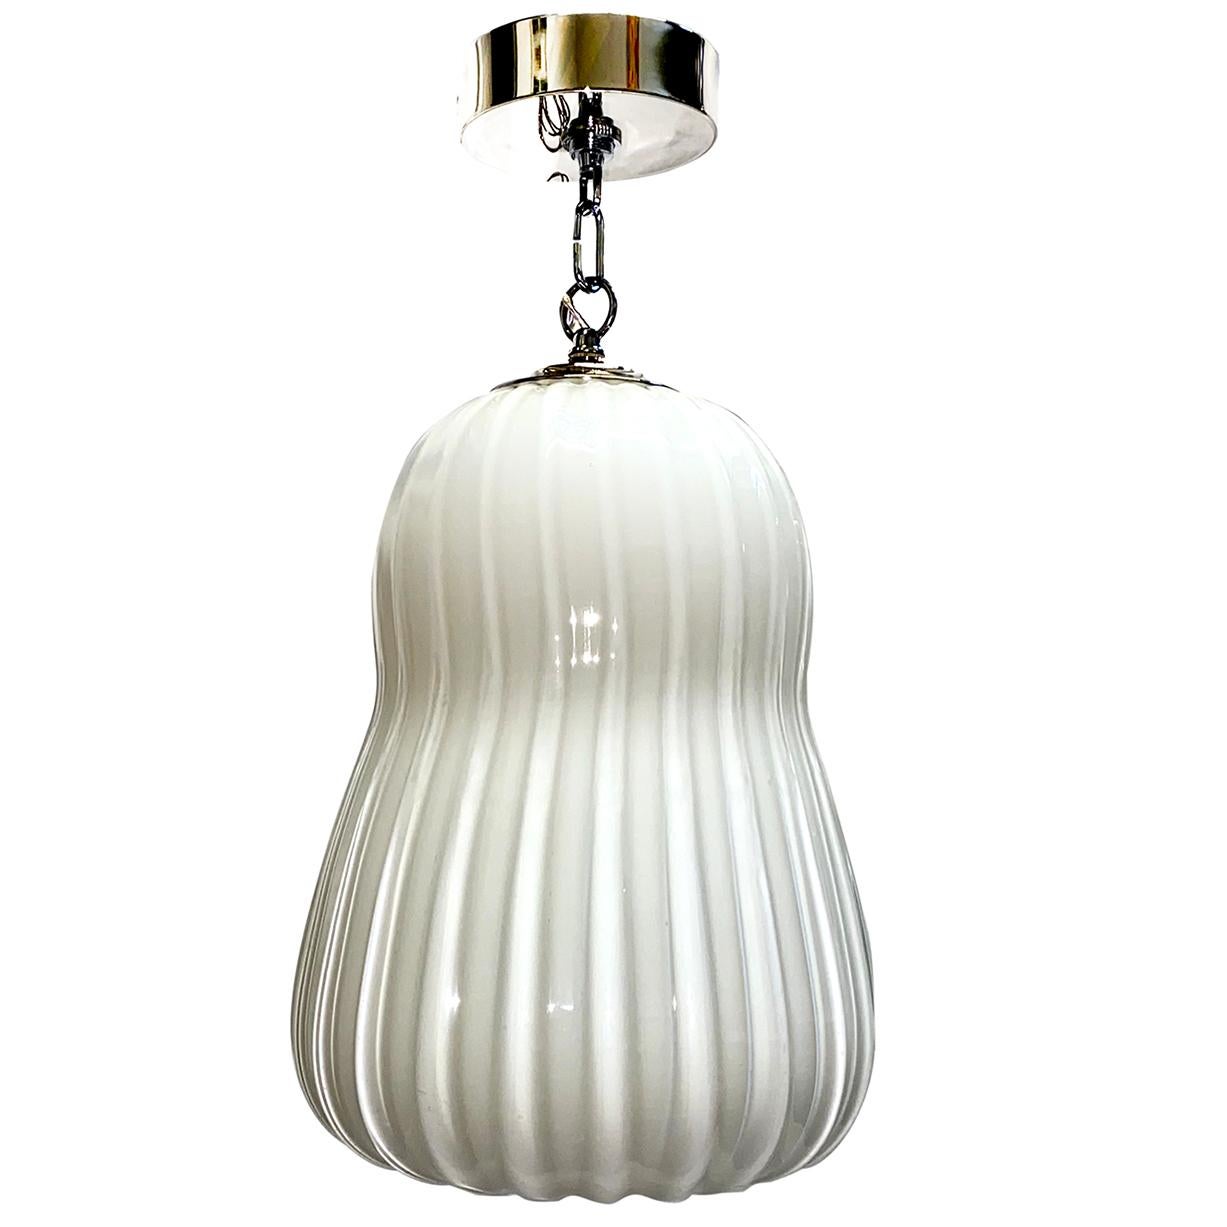 A circa 1950s blown milk glass pendant light fixture with interior lights.

Measurements:
Diameter 11